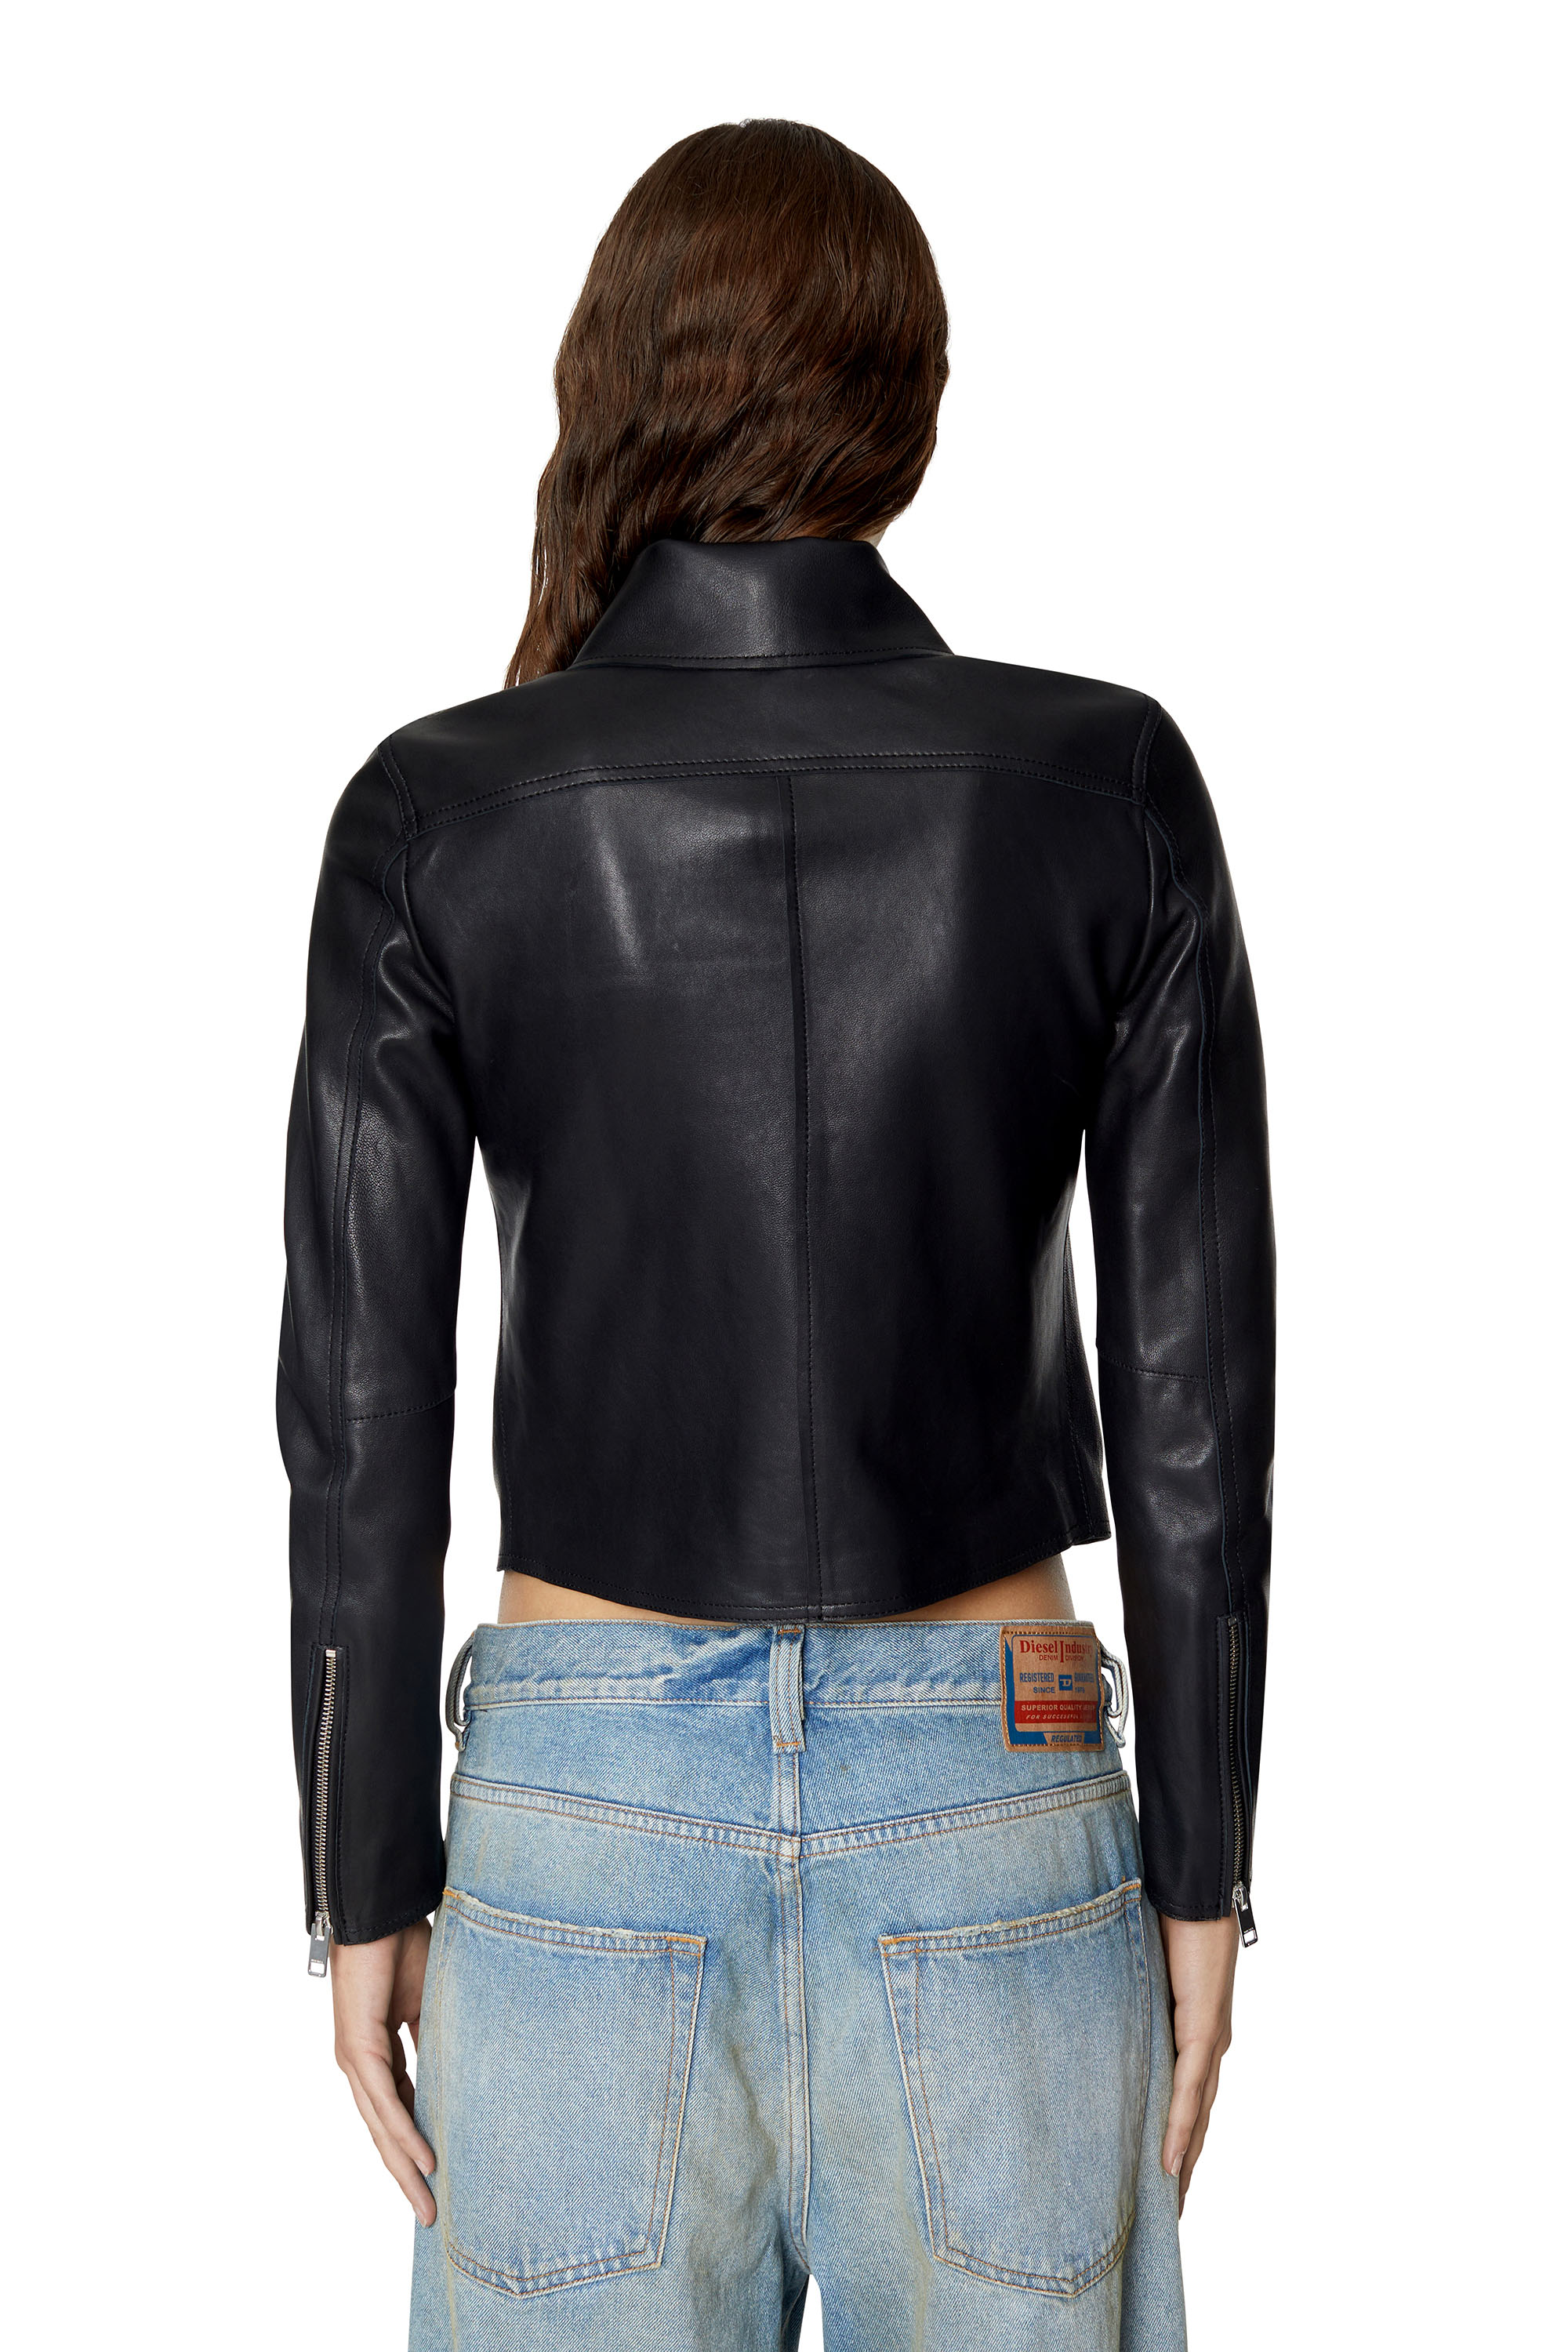 Black discount 95% KIDS FASHION Jackets Print Zara biker jacket 